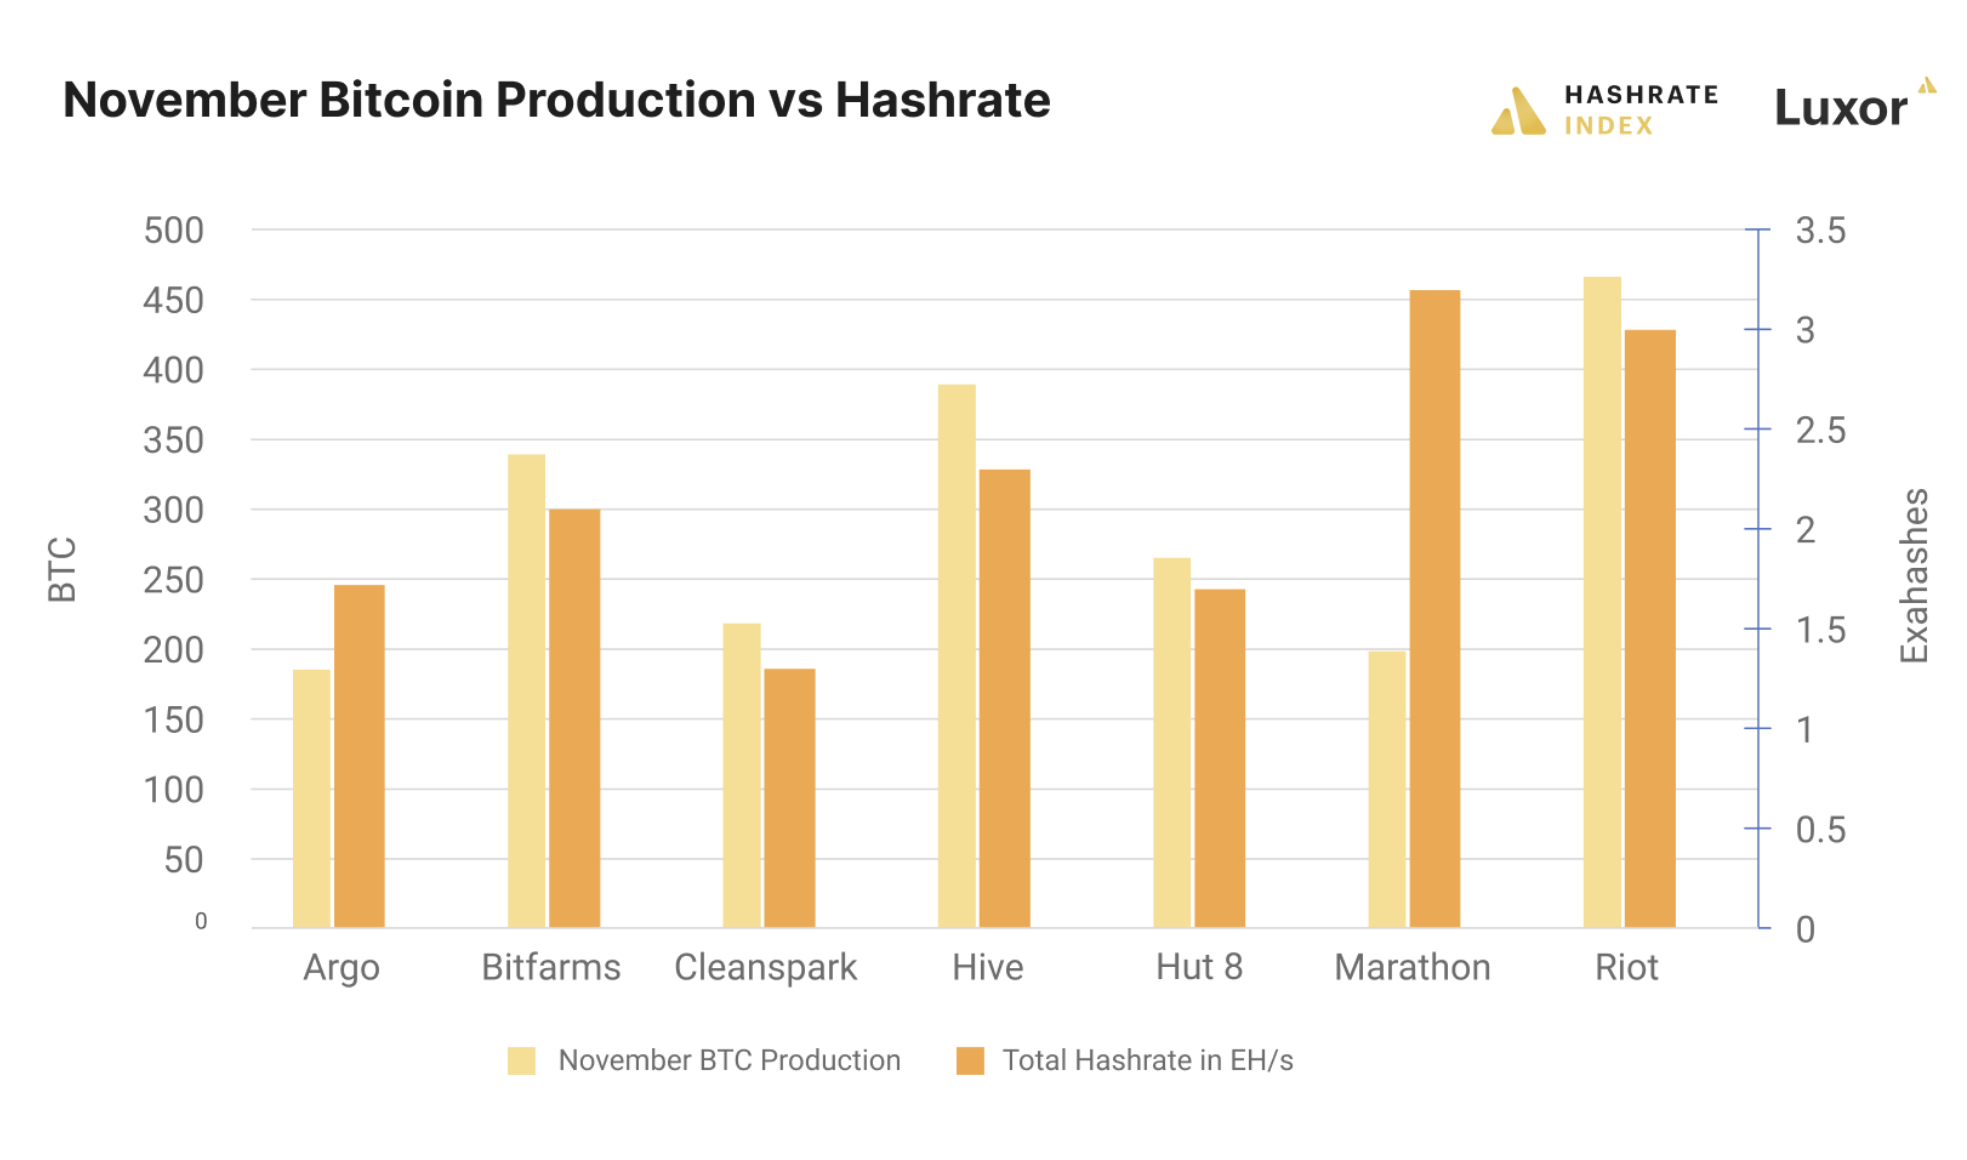 Public miner November BTC production vs. Hashrate Source: press releases, public filings